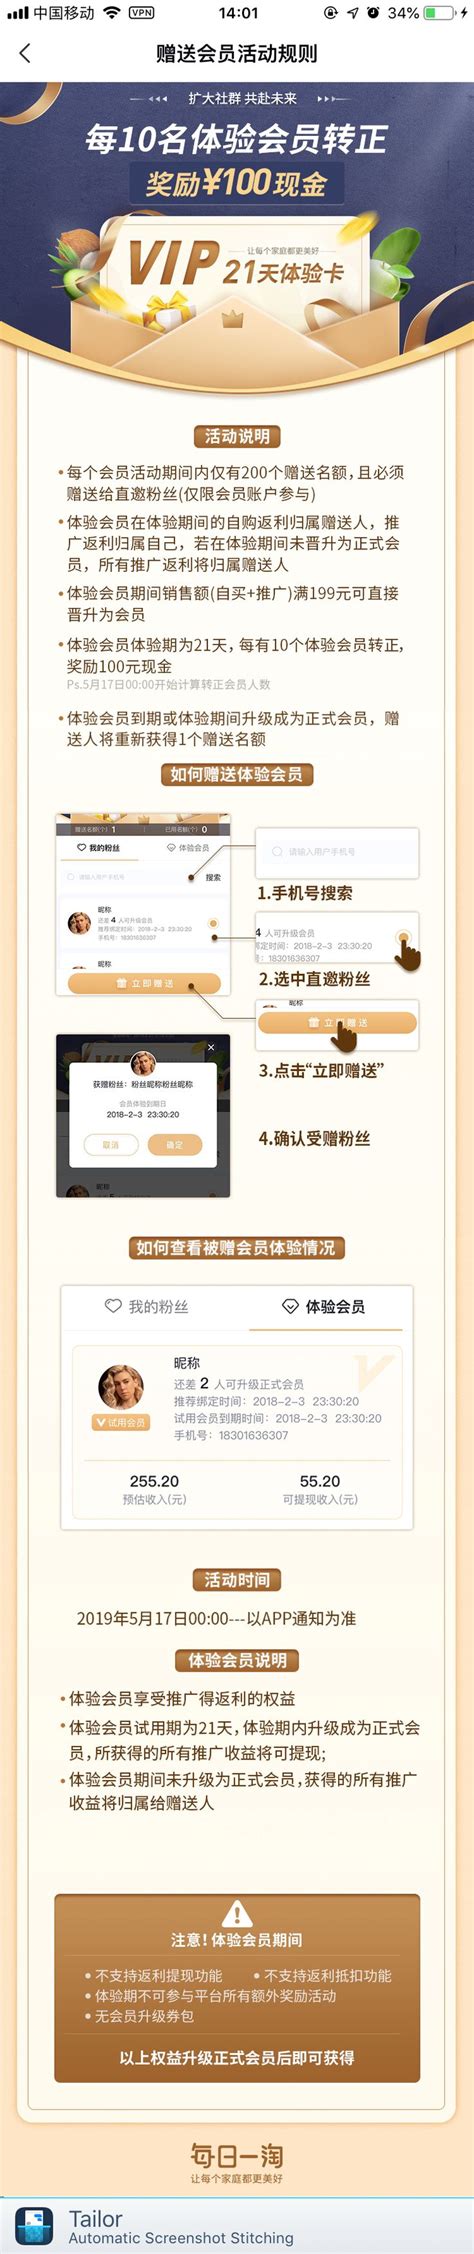 Pin by linda_zi on 返利平台 | Shopping screenshot, Shopping